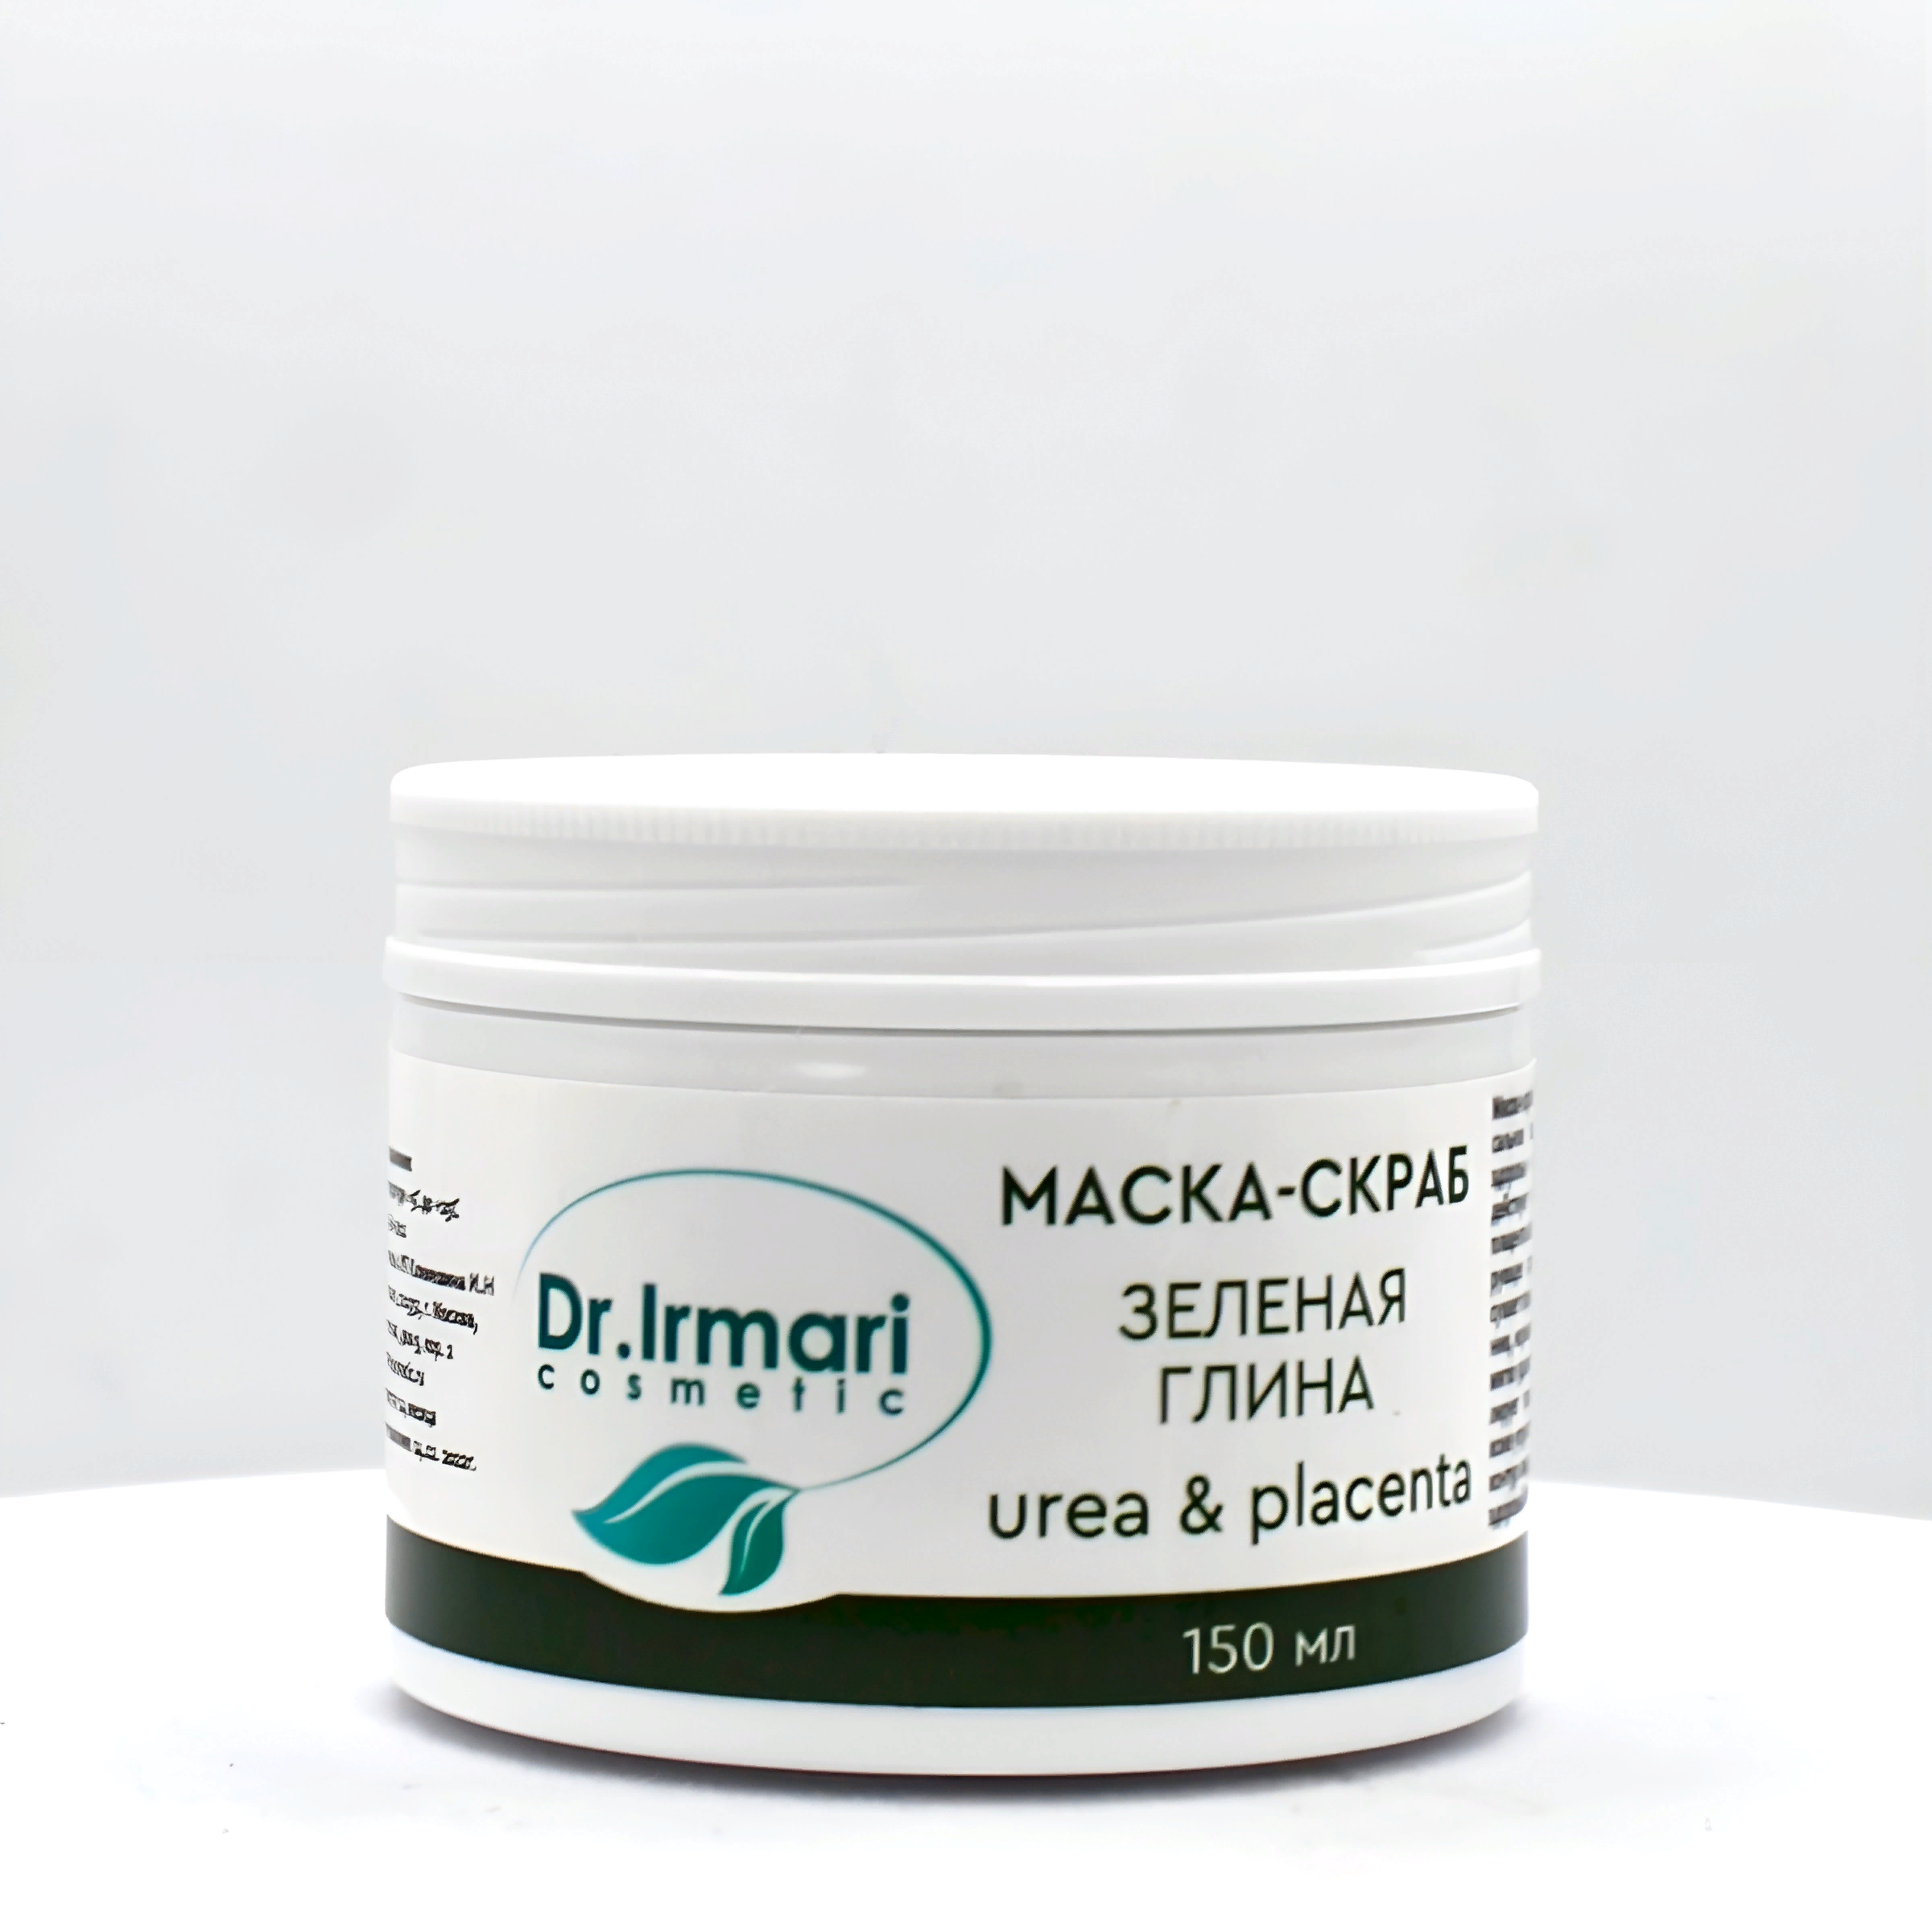 Маска-скраб Dr.Irmari cosmetic Urea & Placenta Зелёная глина 150 мл линза 509 sinister x5 зелёная oem 509 x5len 13 gd